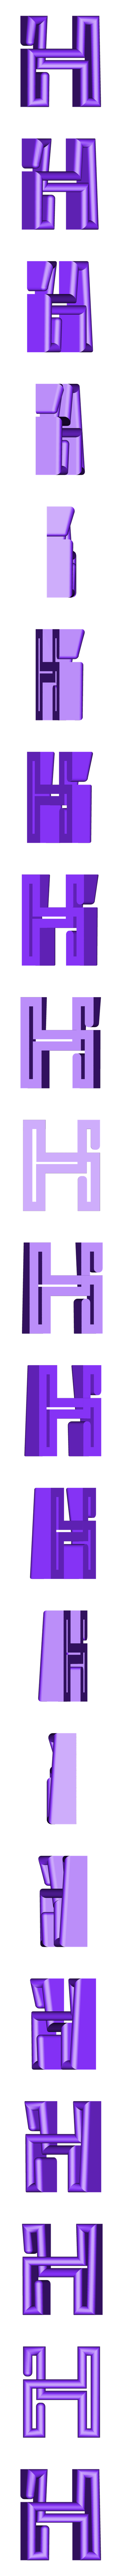 H.stl Download free STL file Alphabet "36 Days of Type" • 3D printable model, dukedoks